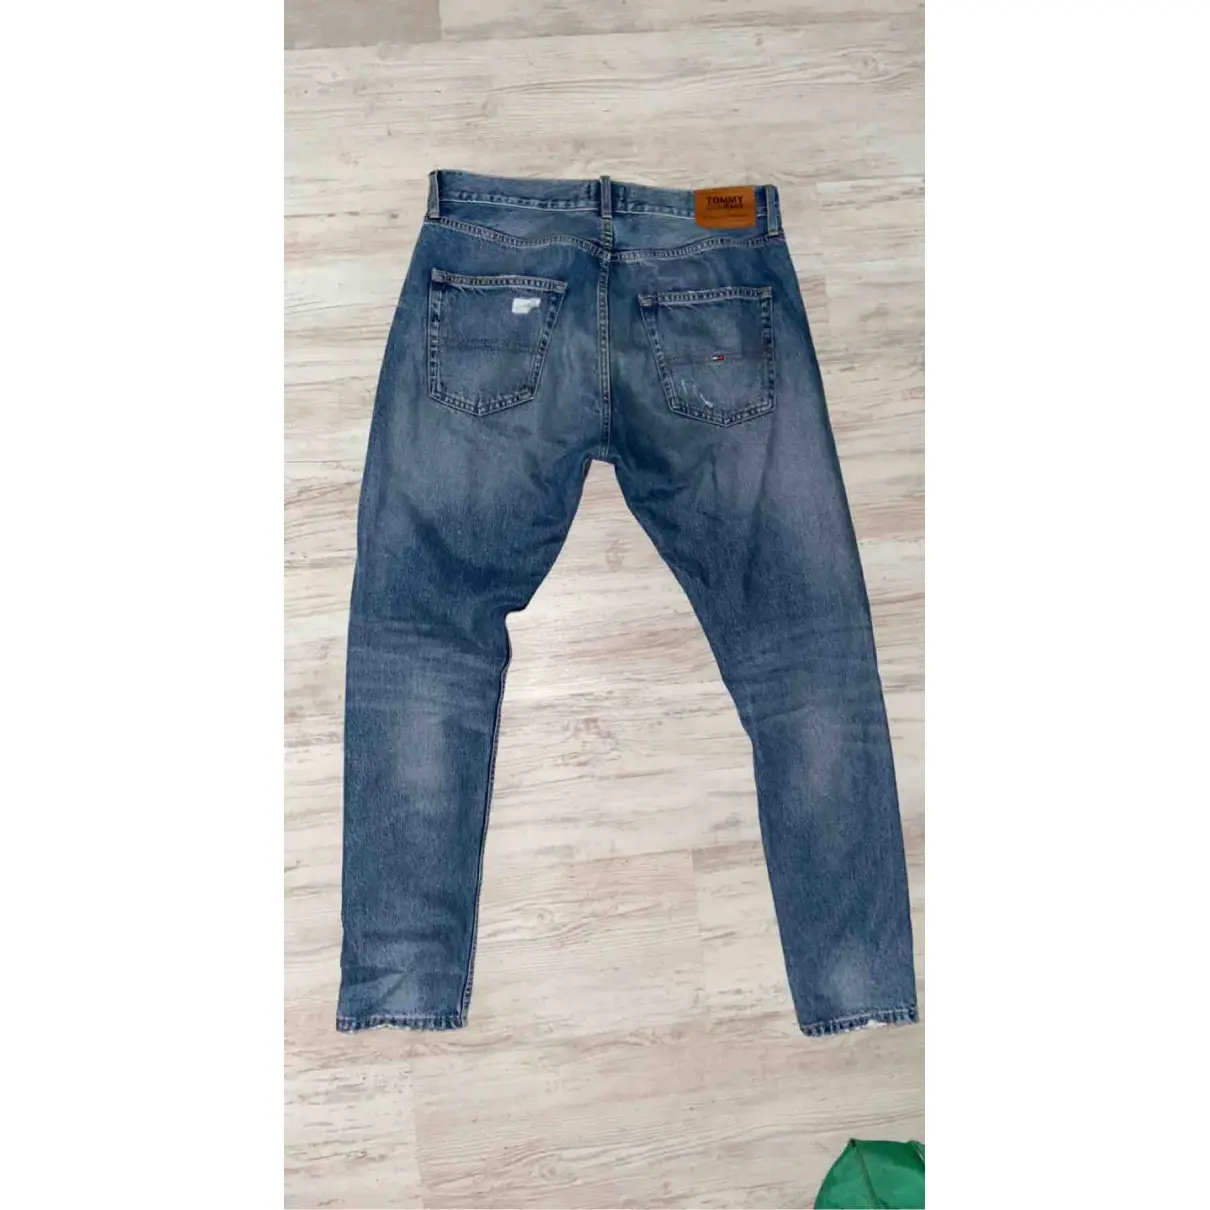 Buy Tommy Jeans Slim jean online